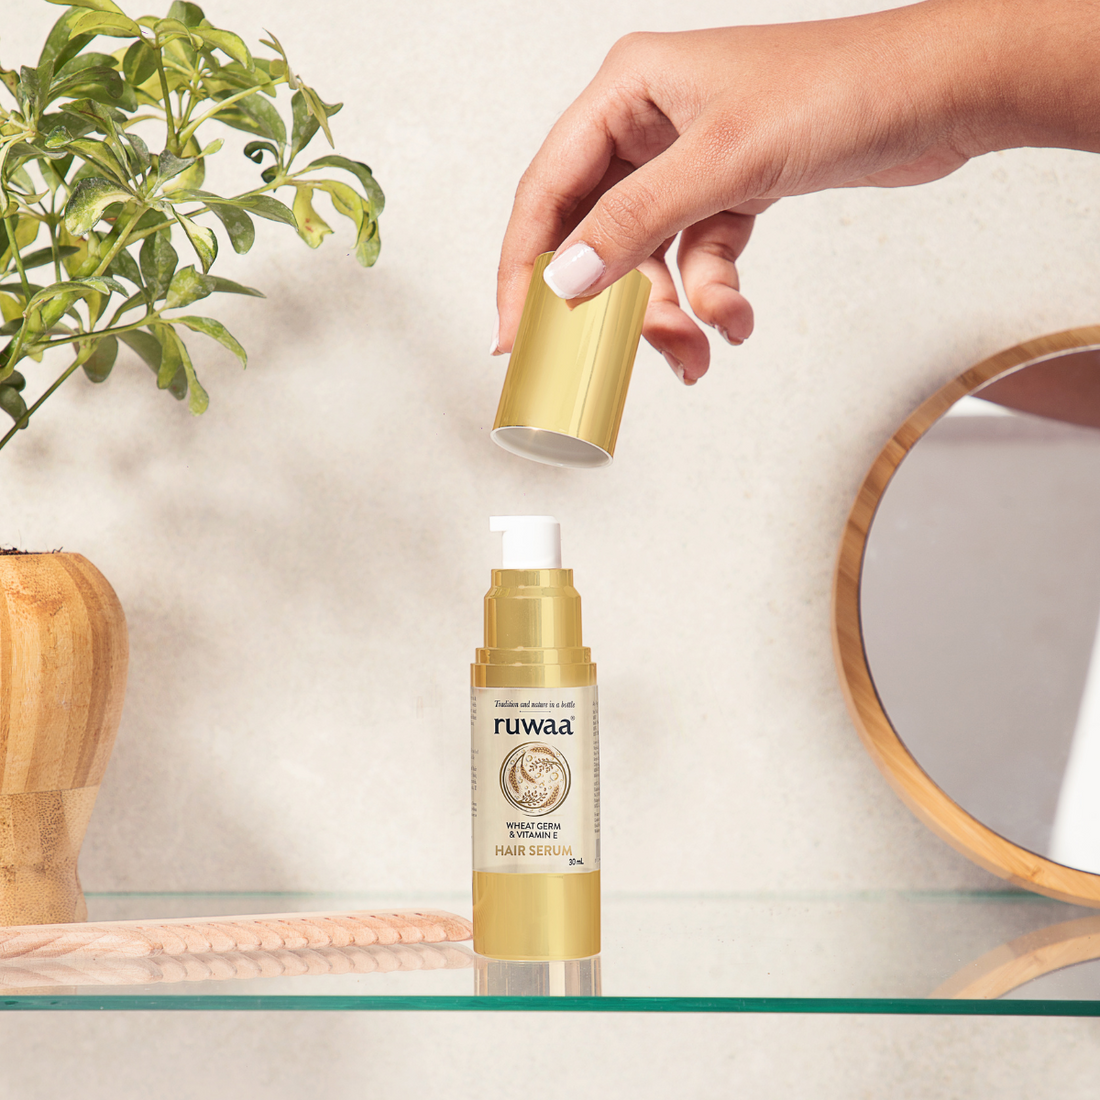 Choosing the Right Anti-Hair Fall Shampoo the Organic Way